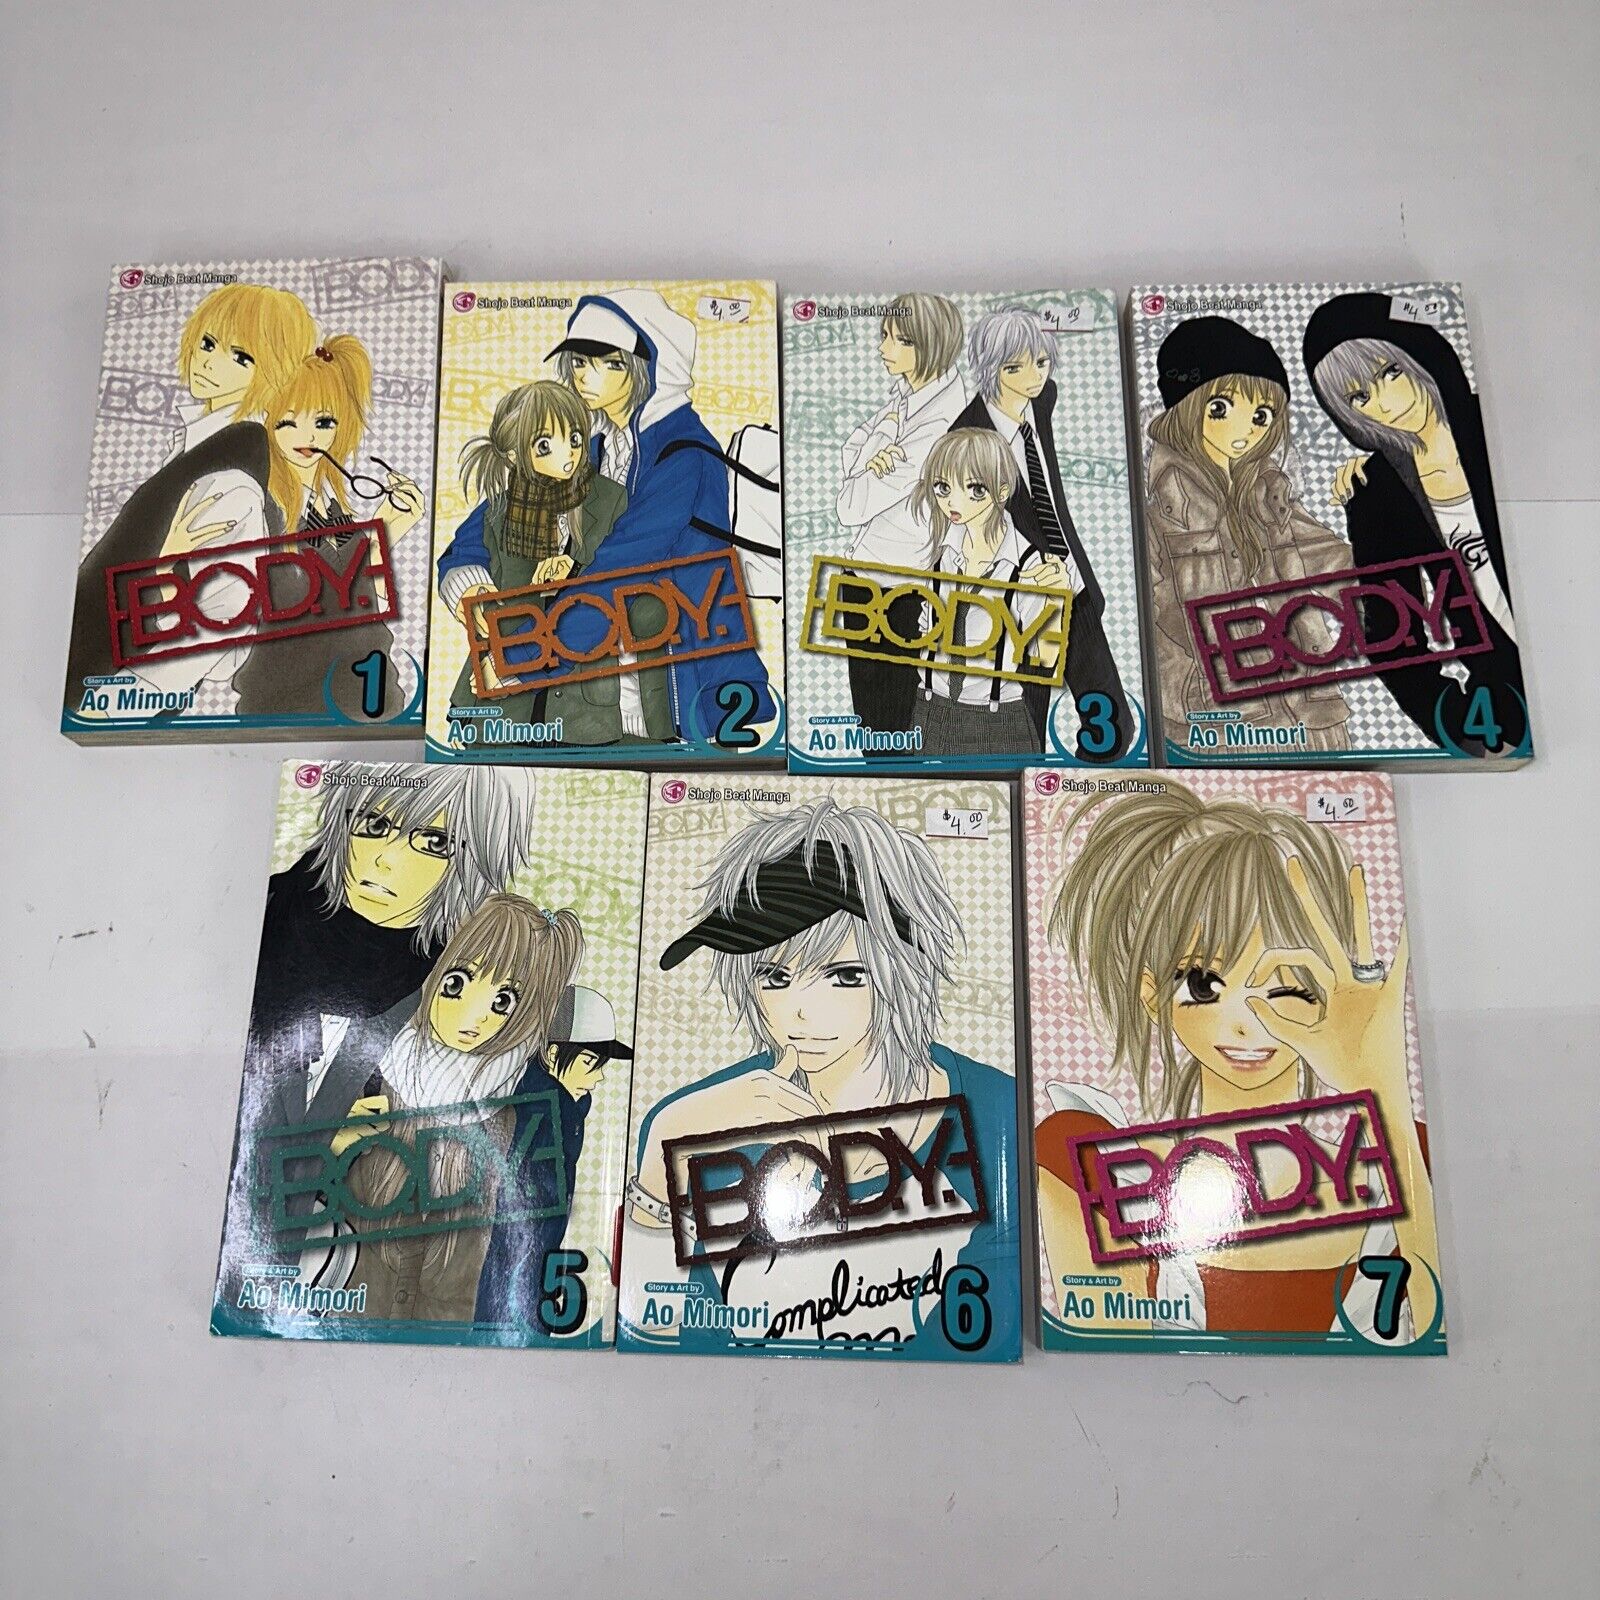 B.O.D.Y. (BODY) by Ao Mimori Vol 1-7 Complete English Set Manga Lot